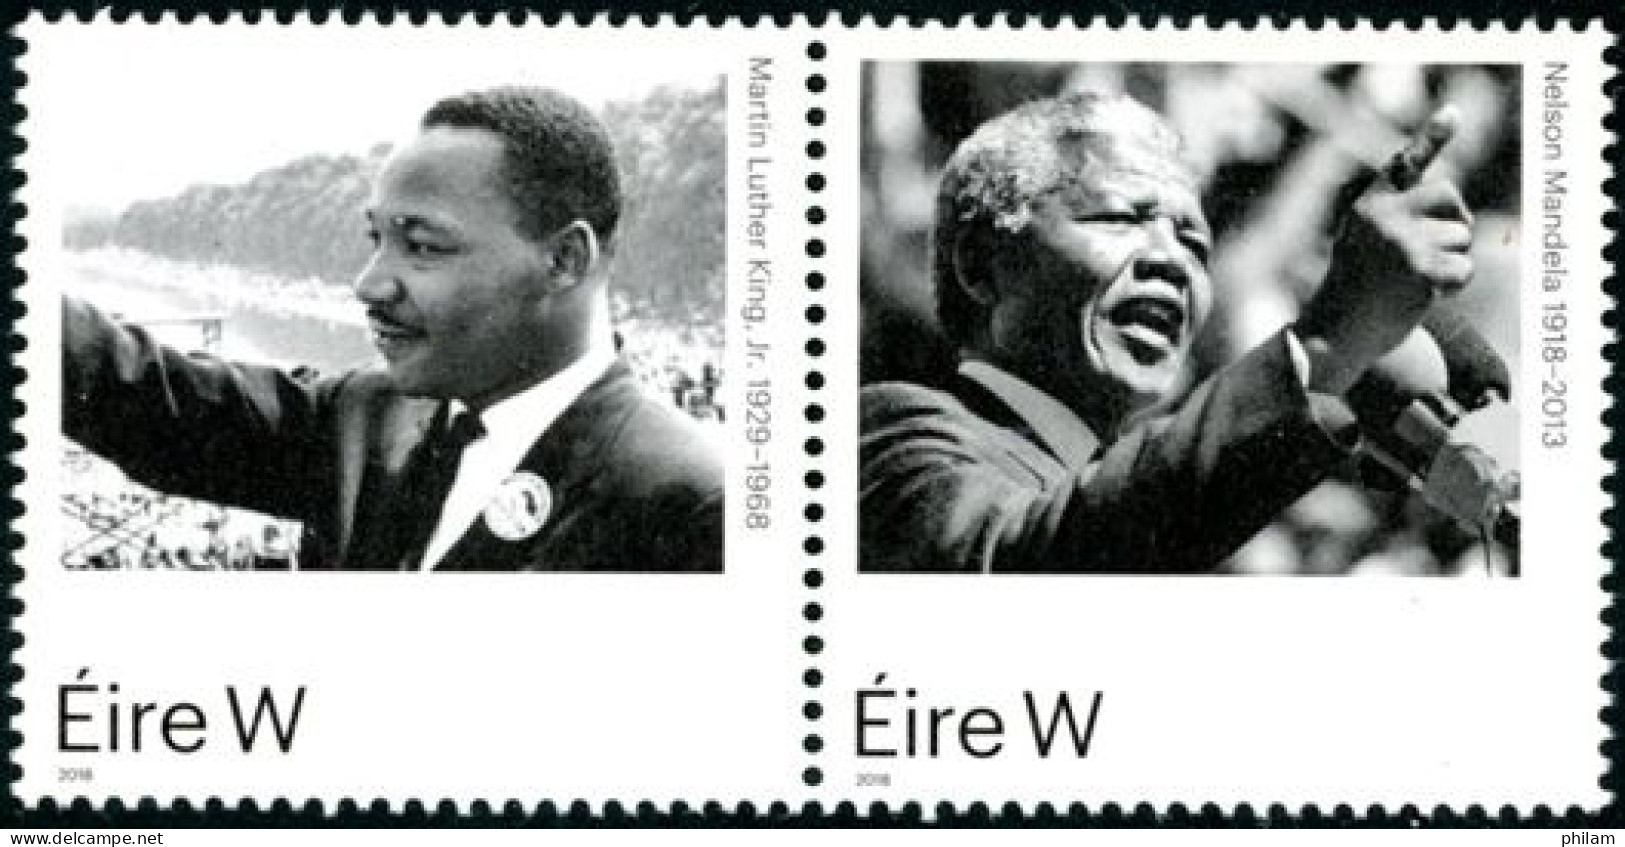 IRLANDE 2018 - Martin Luther King Et Nelson Mandela - 2 V. - Nuovi